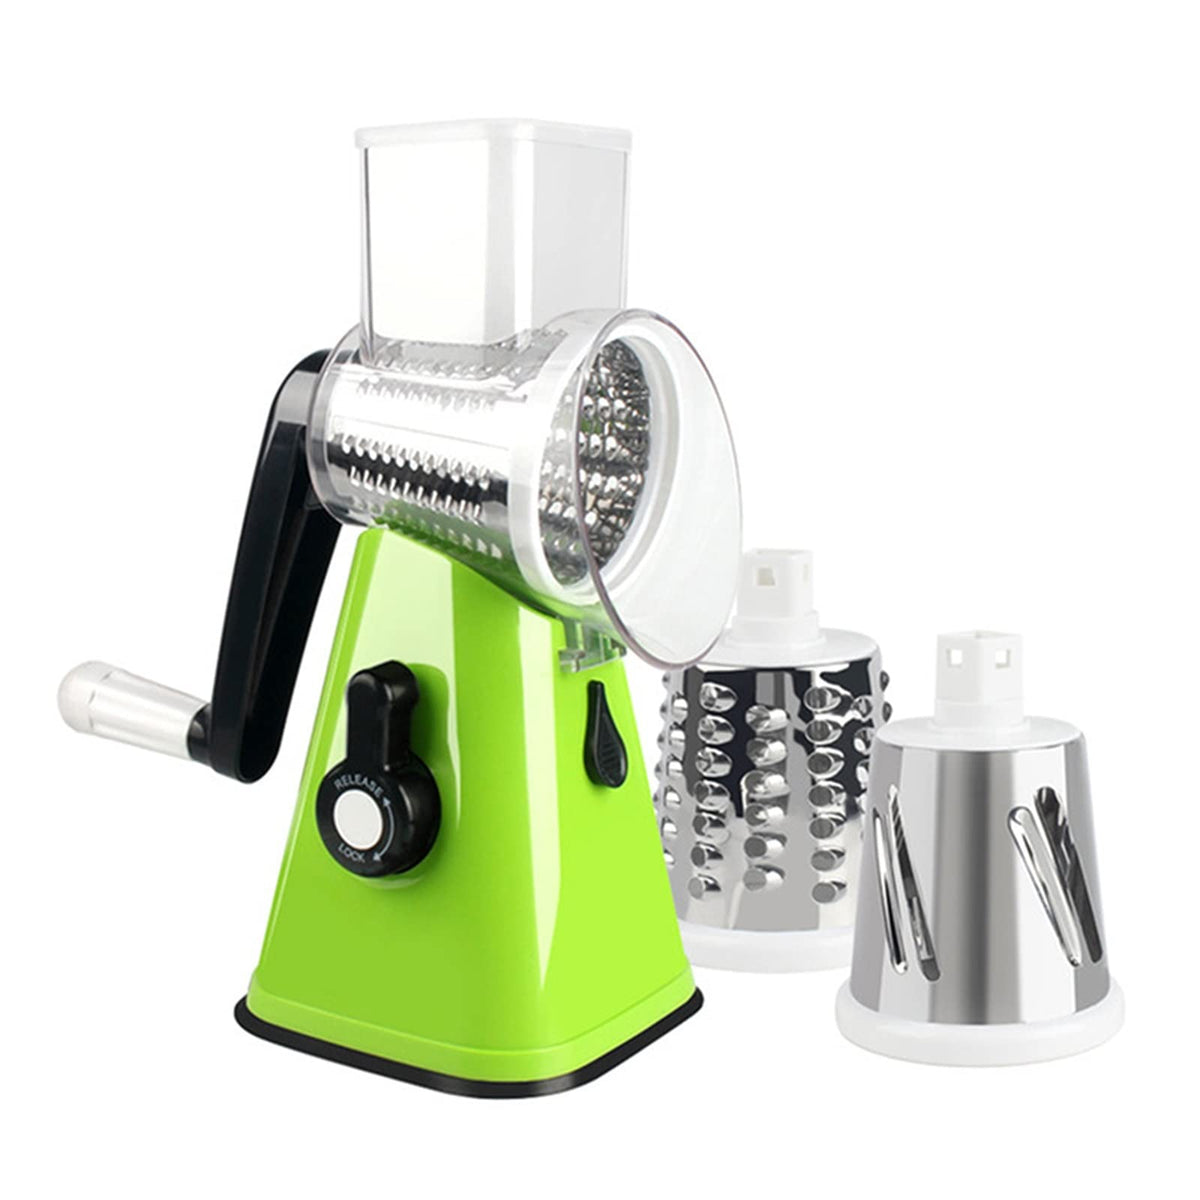 Vegetable cutting machine, Vegetable cutter dicer shredder Manufacturer -  iMetto